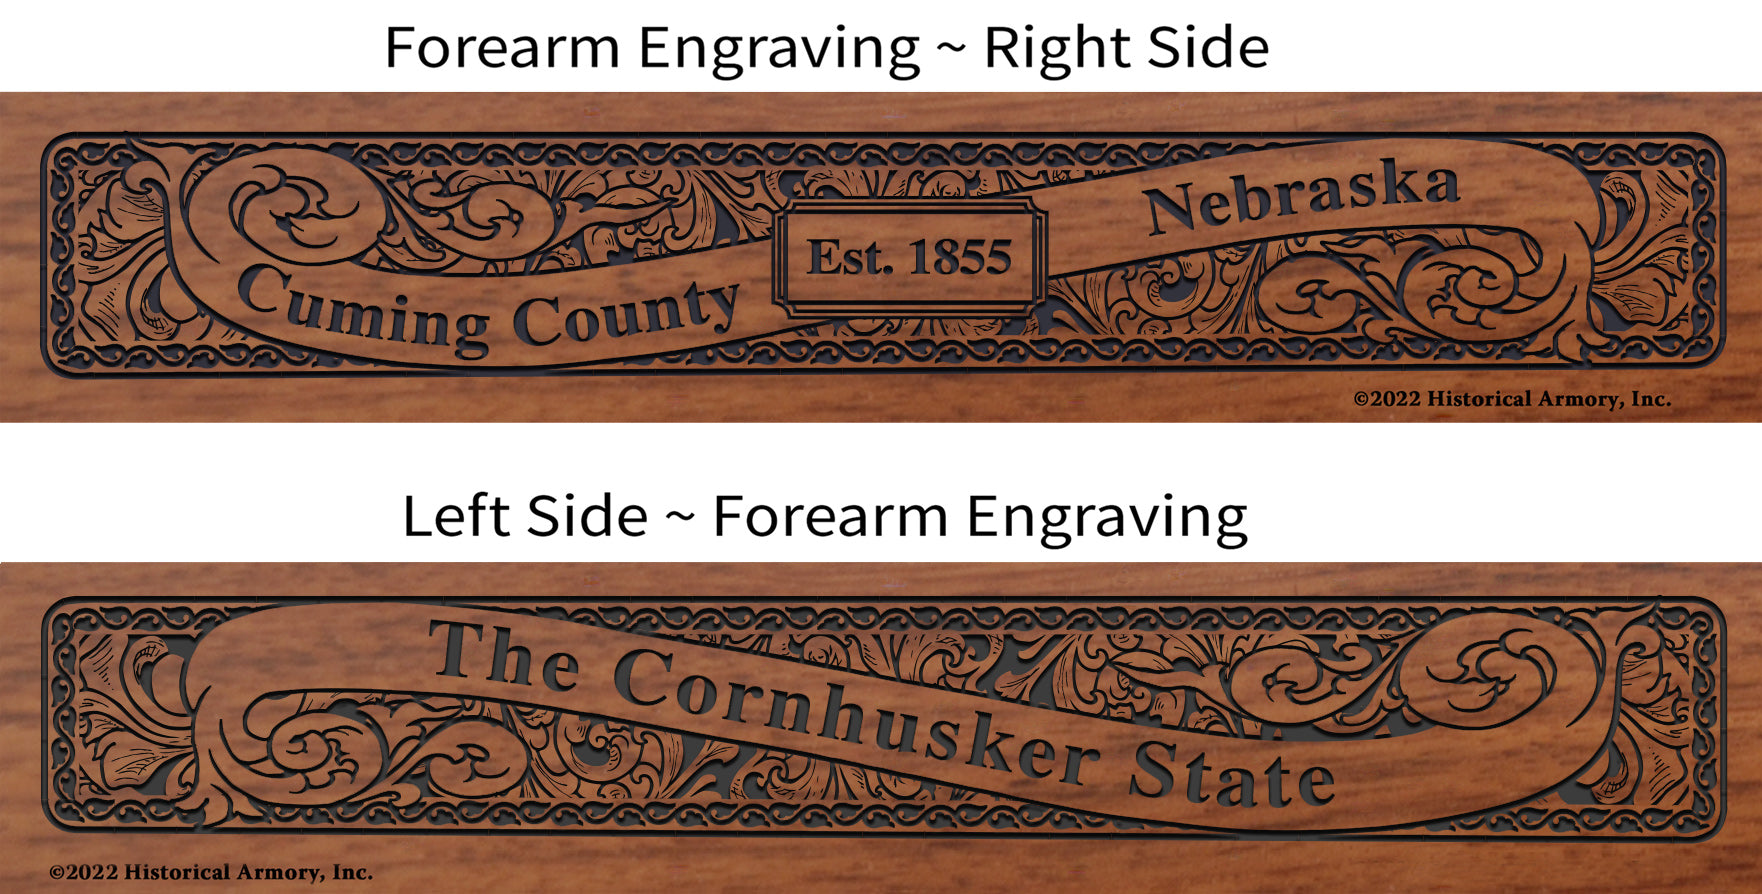 Cuming County Nebraska Engraved Rifle Forearm